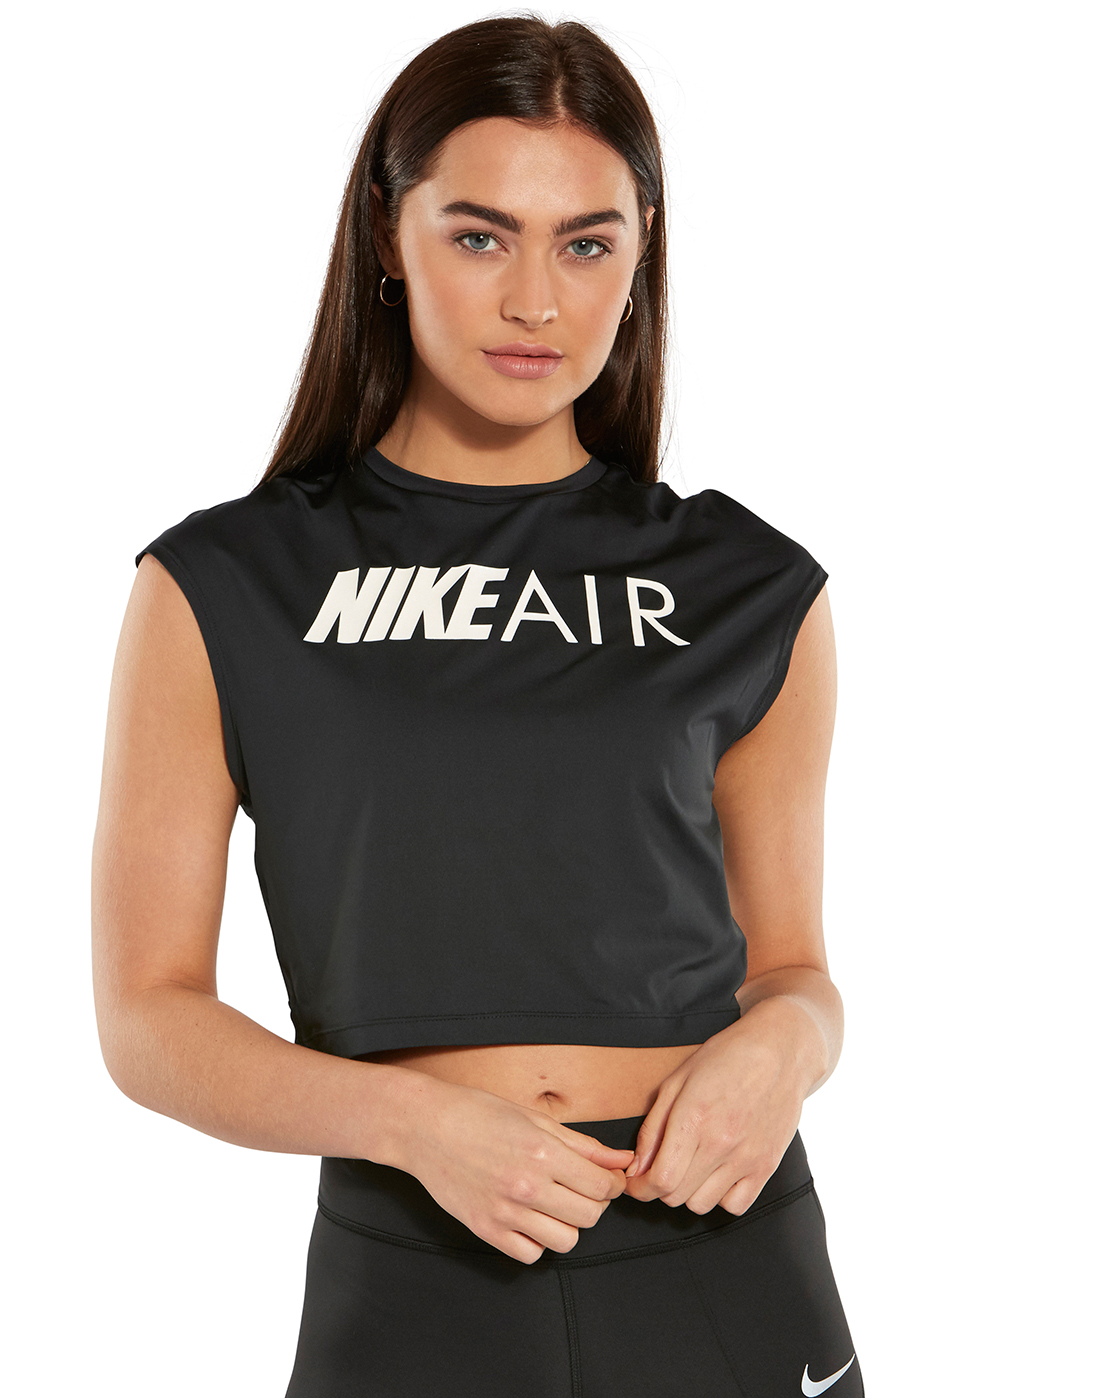 Women's Black Cropped Nike Air T-Shirt 